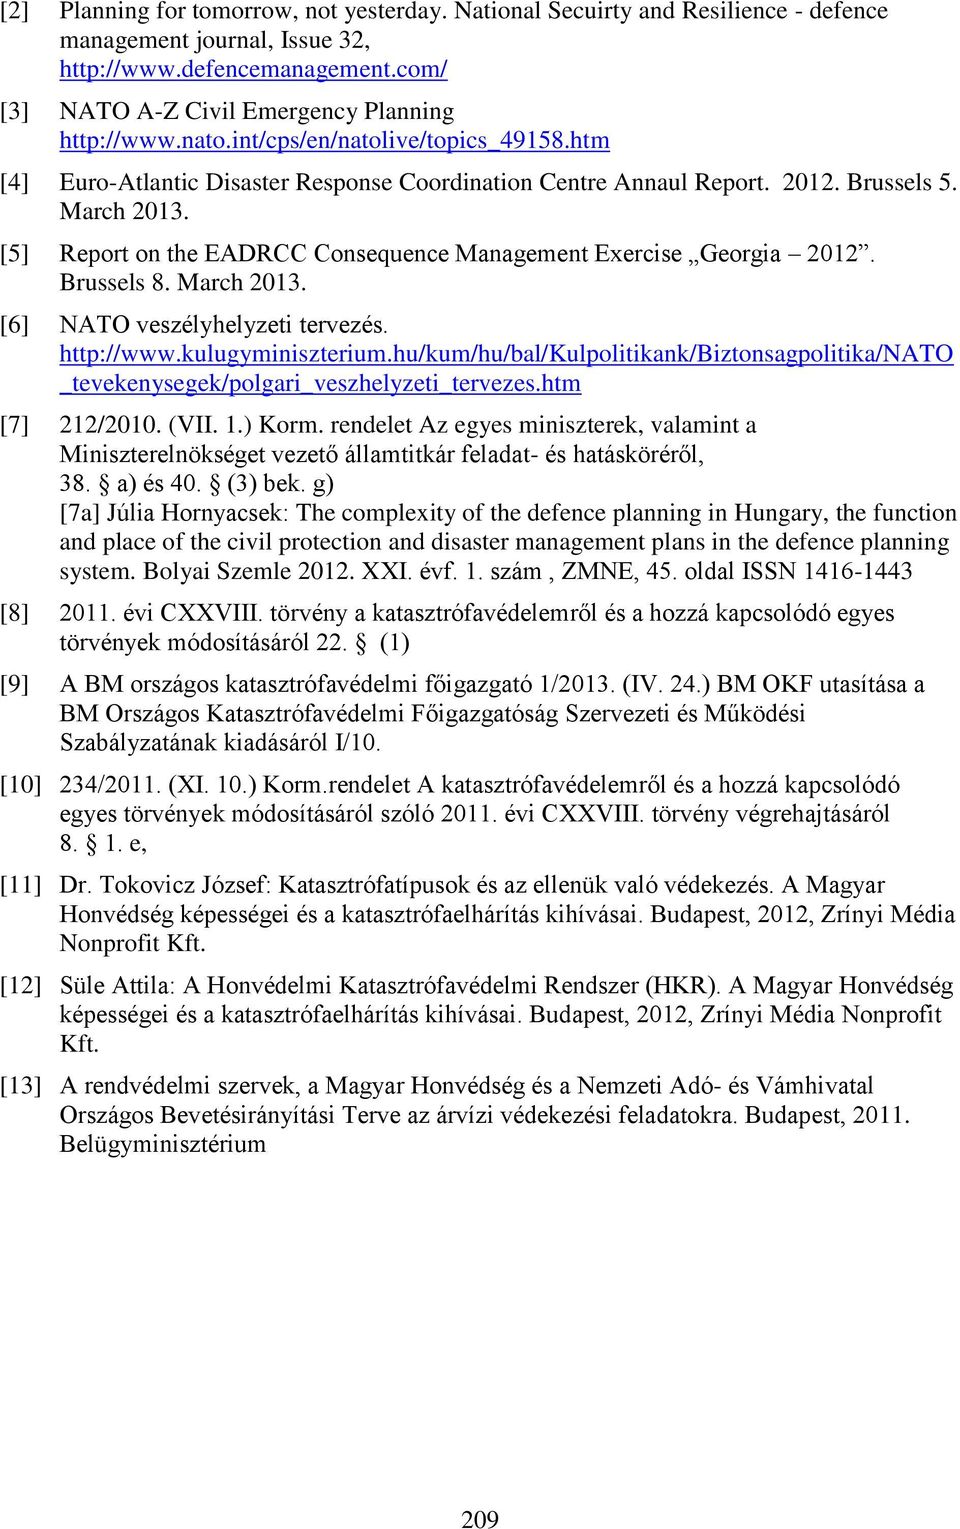 [5] Report on the EADRCC Consequence Management Exercise Georgia 2012. Brussels 8. March 2013. [6] NATO veszélyhelyzeti tervezés. http://www.kulugyminiszterium.